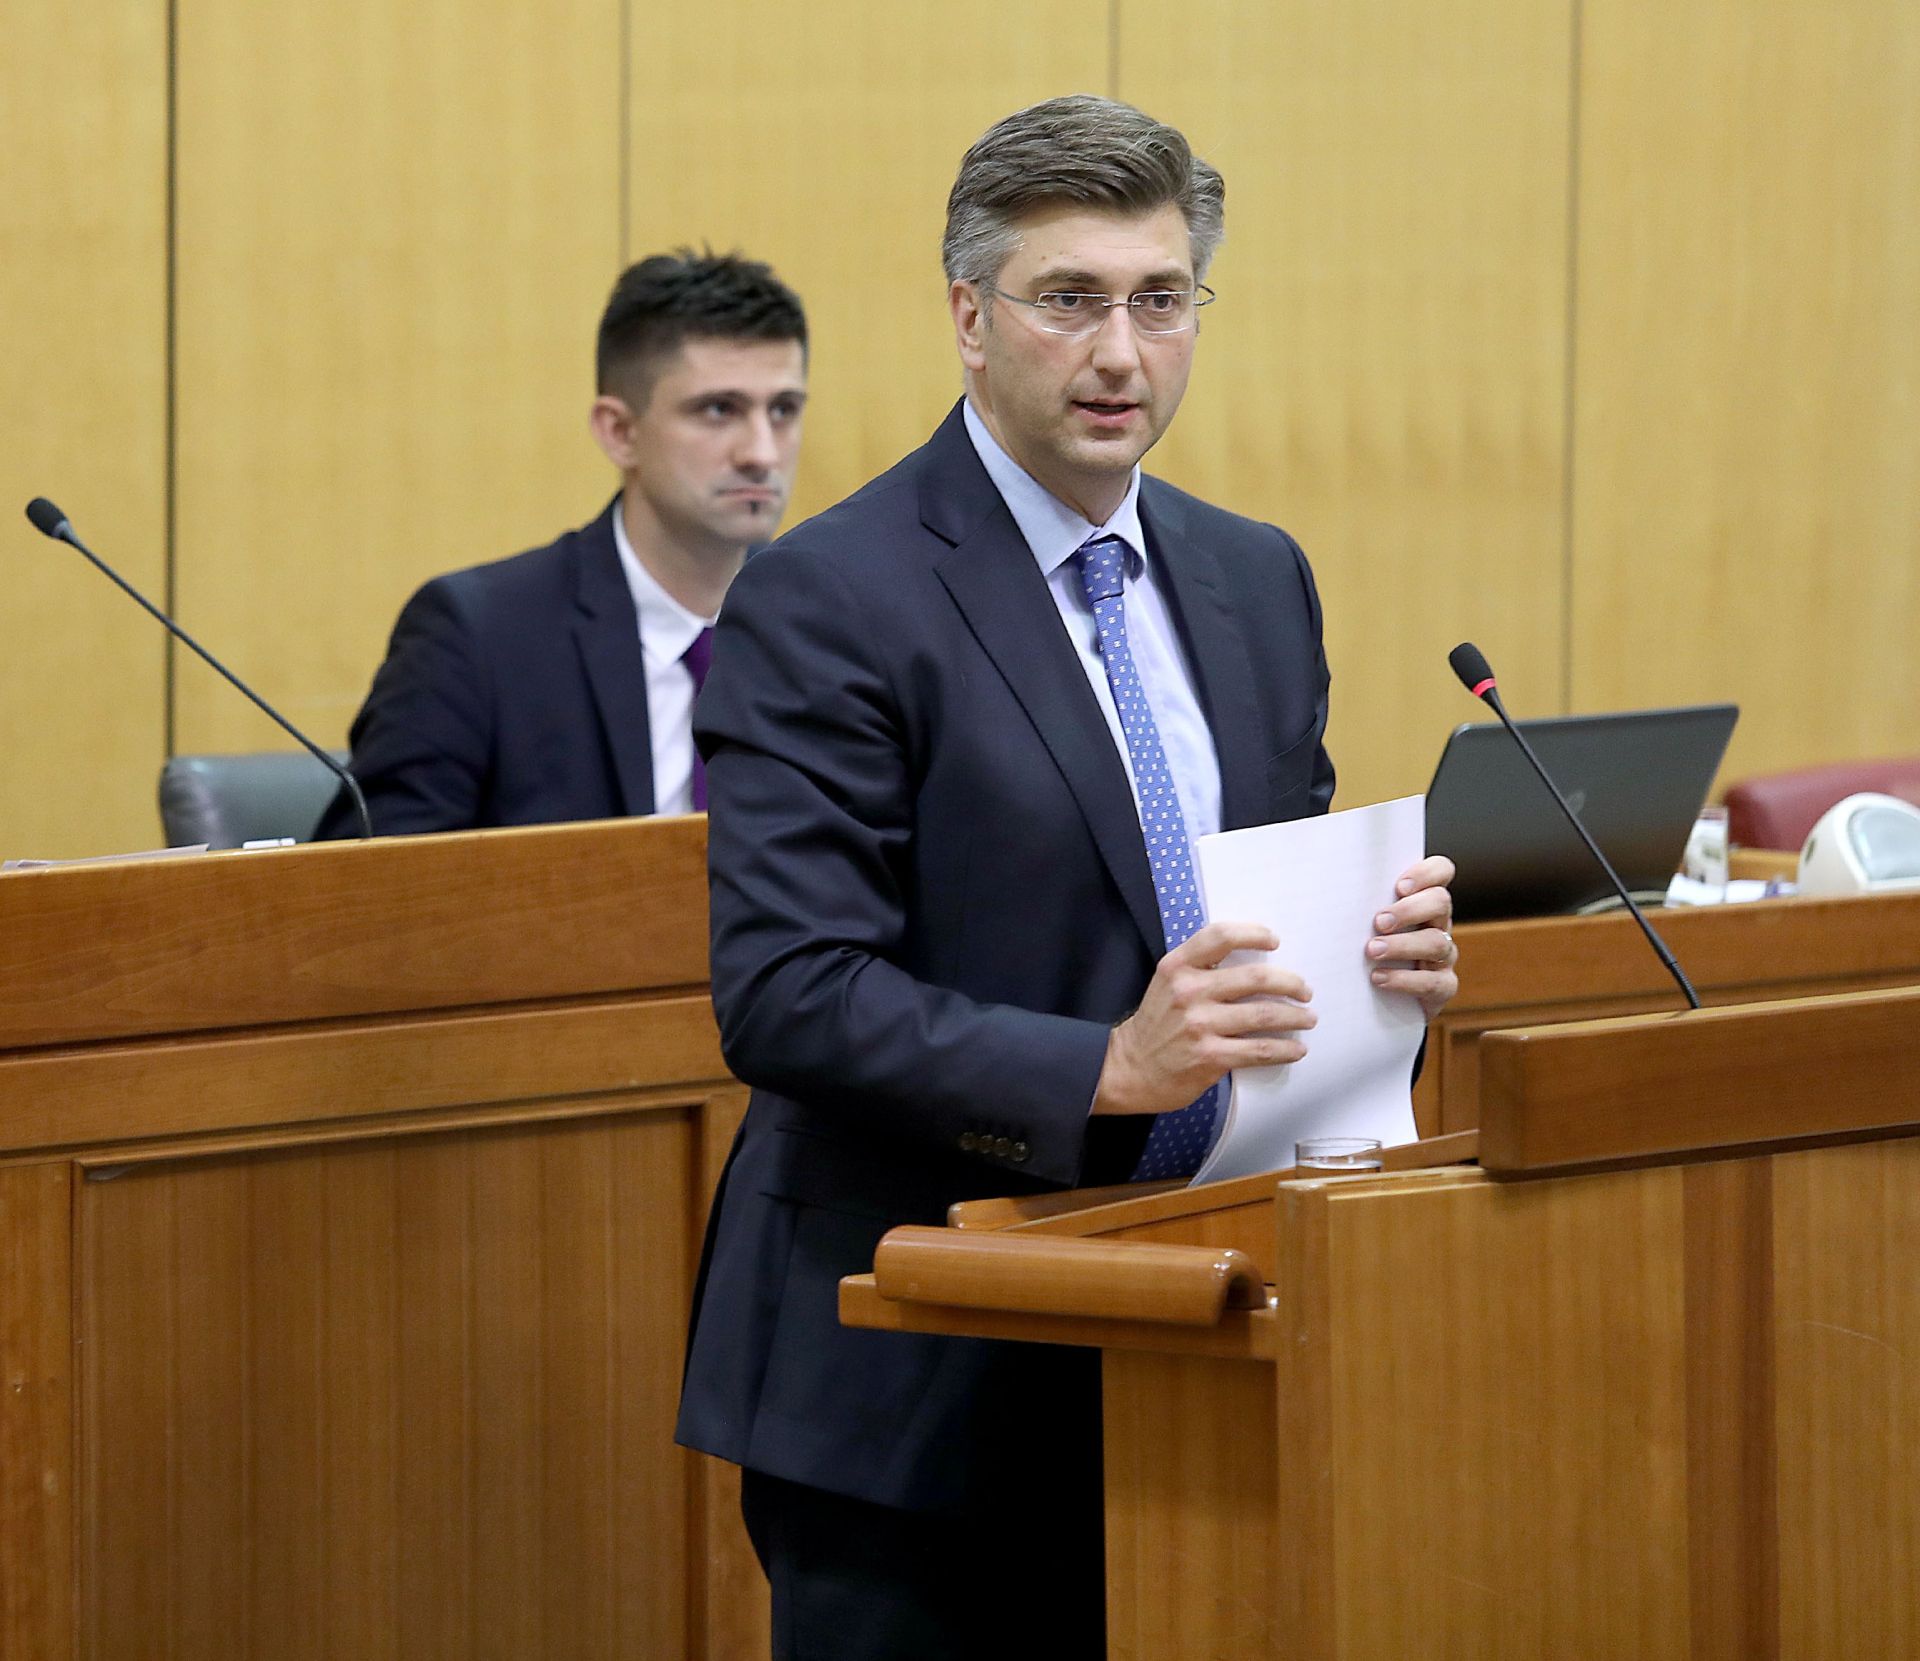 CRO DEMOSKOP: Pernar među deset najpozitivnijih političara, Plenković na vrhu ljestvice